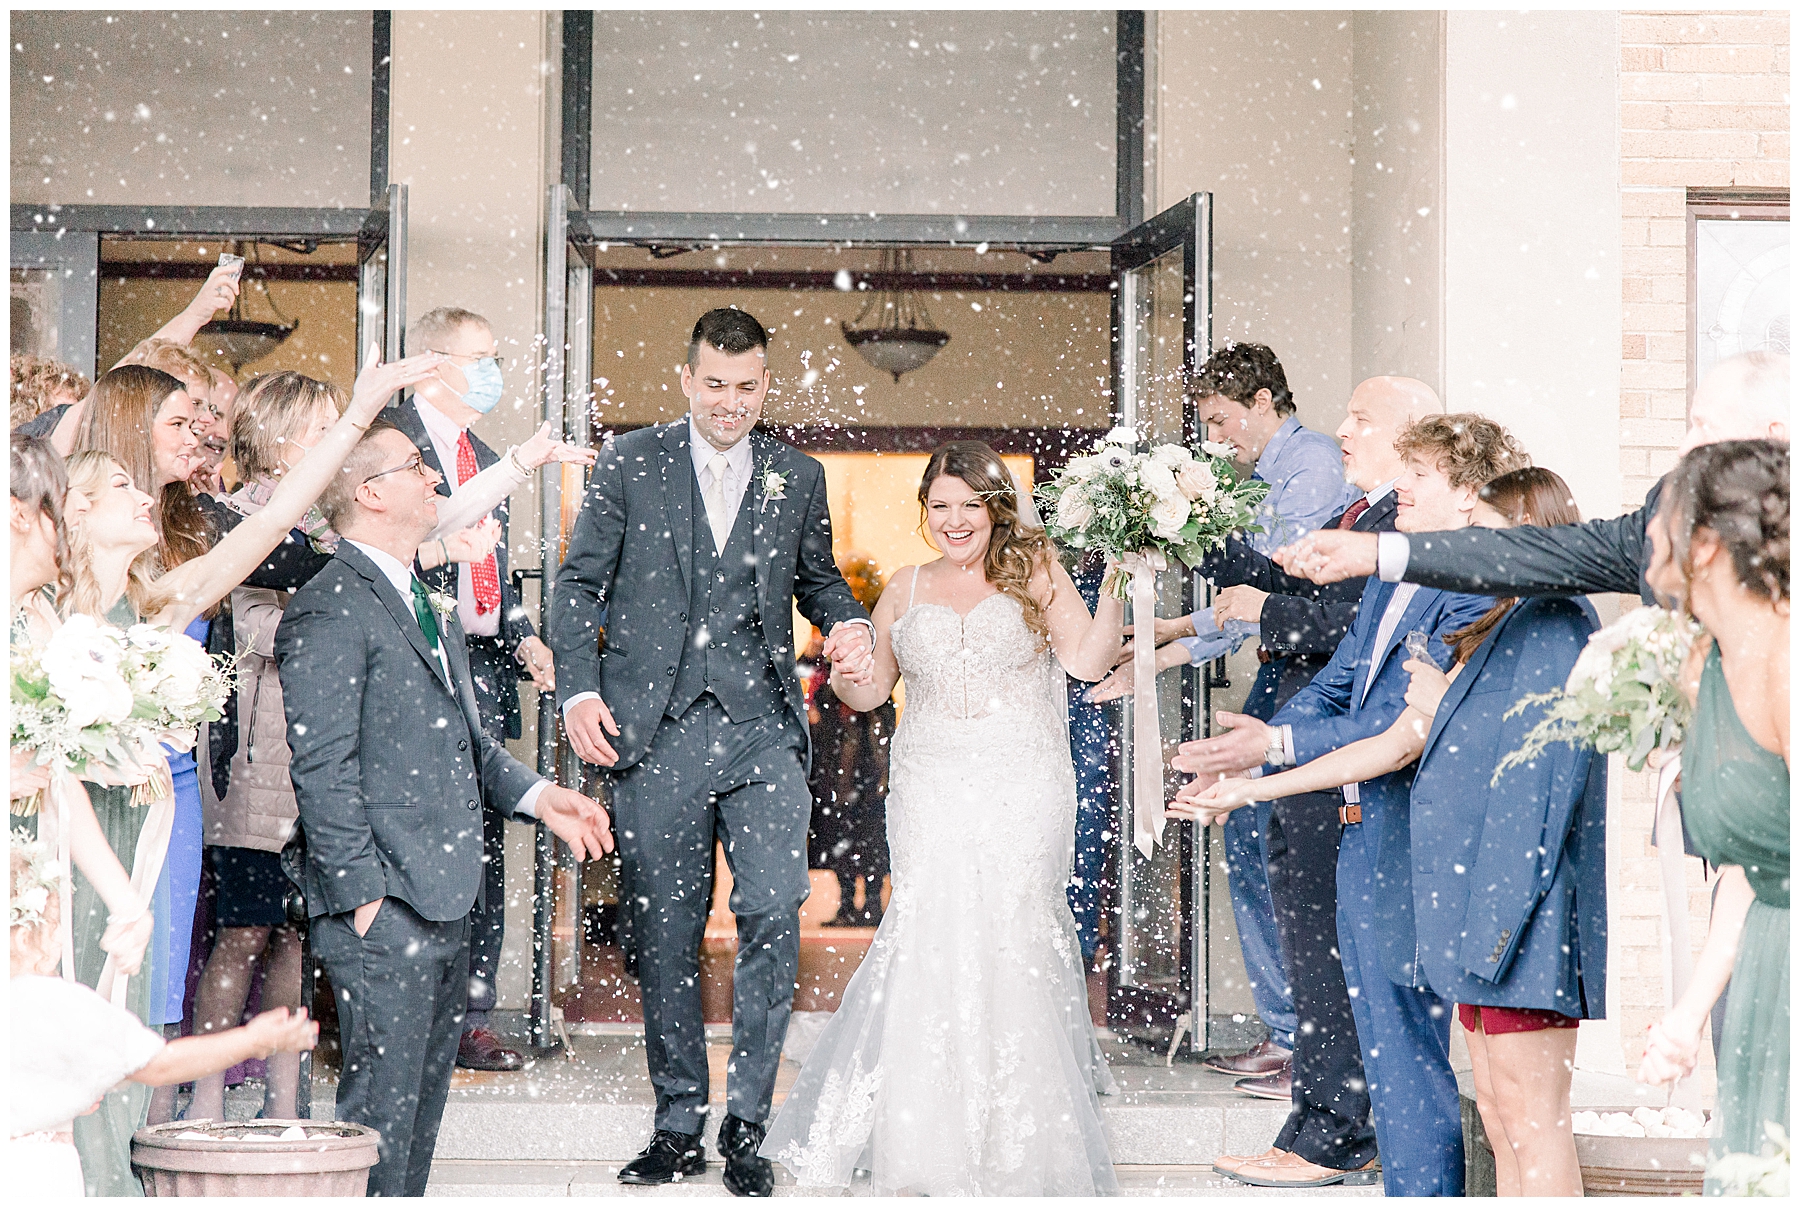 wedding guests throw fake snow at newlyweds